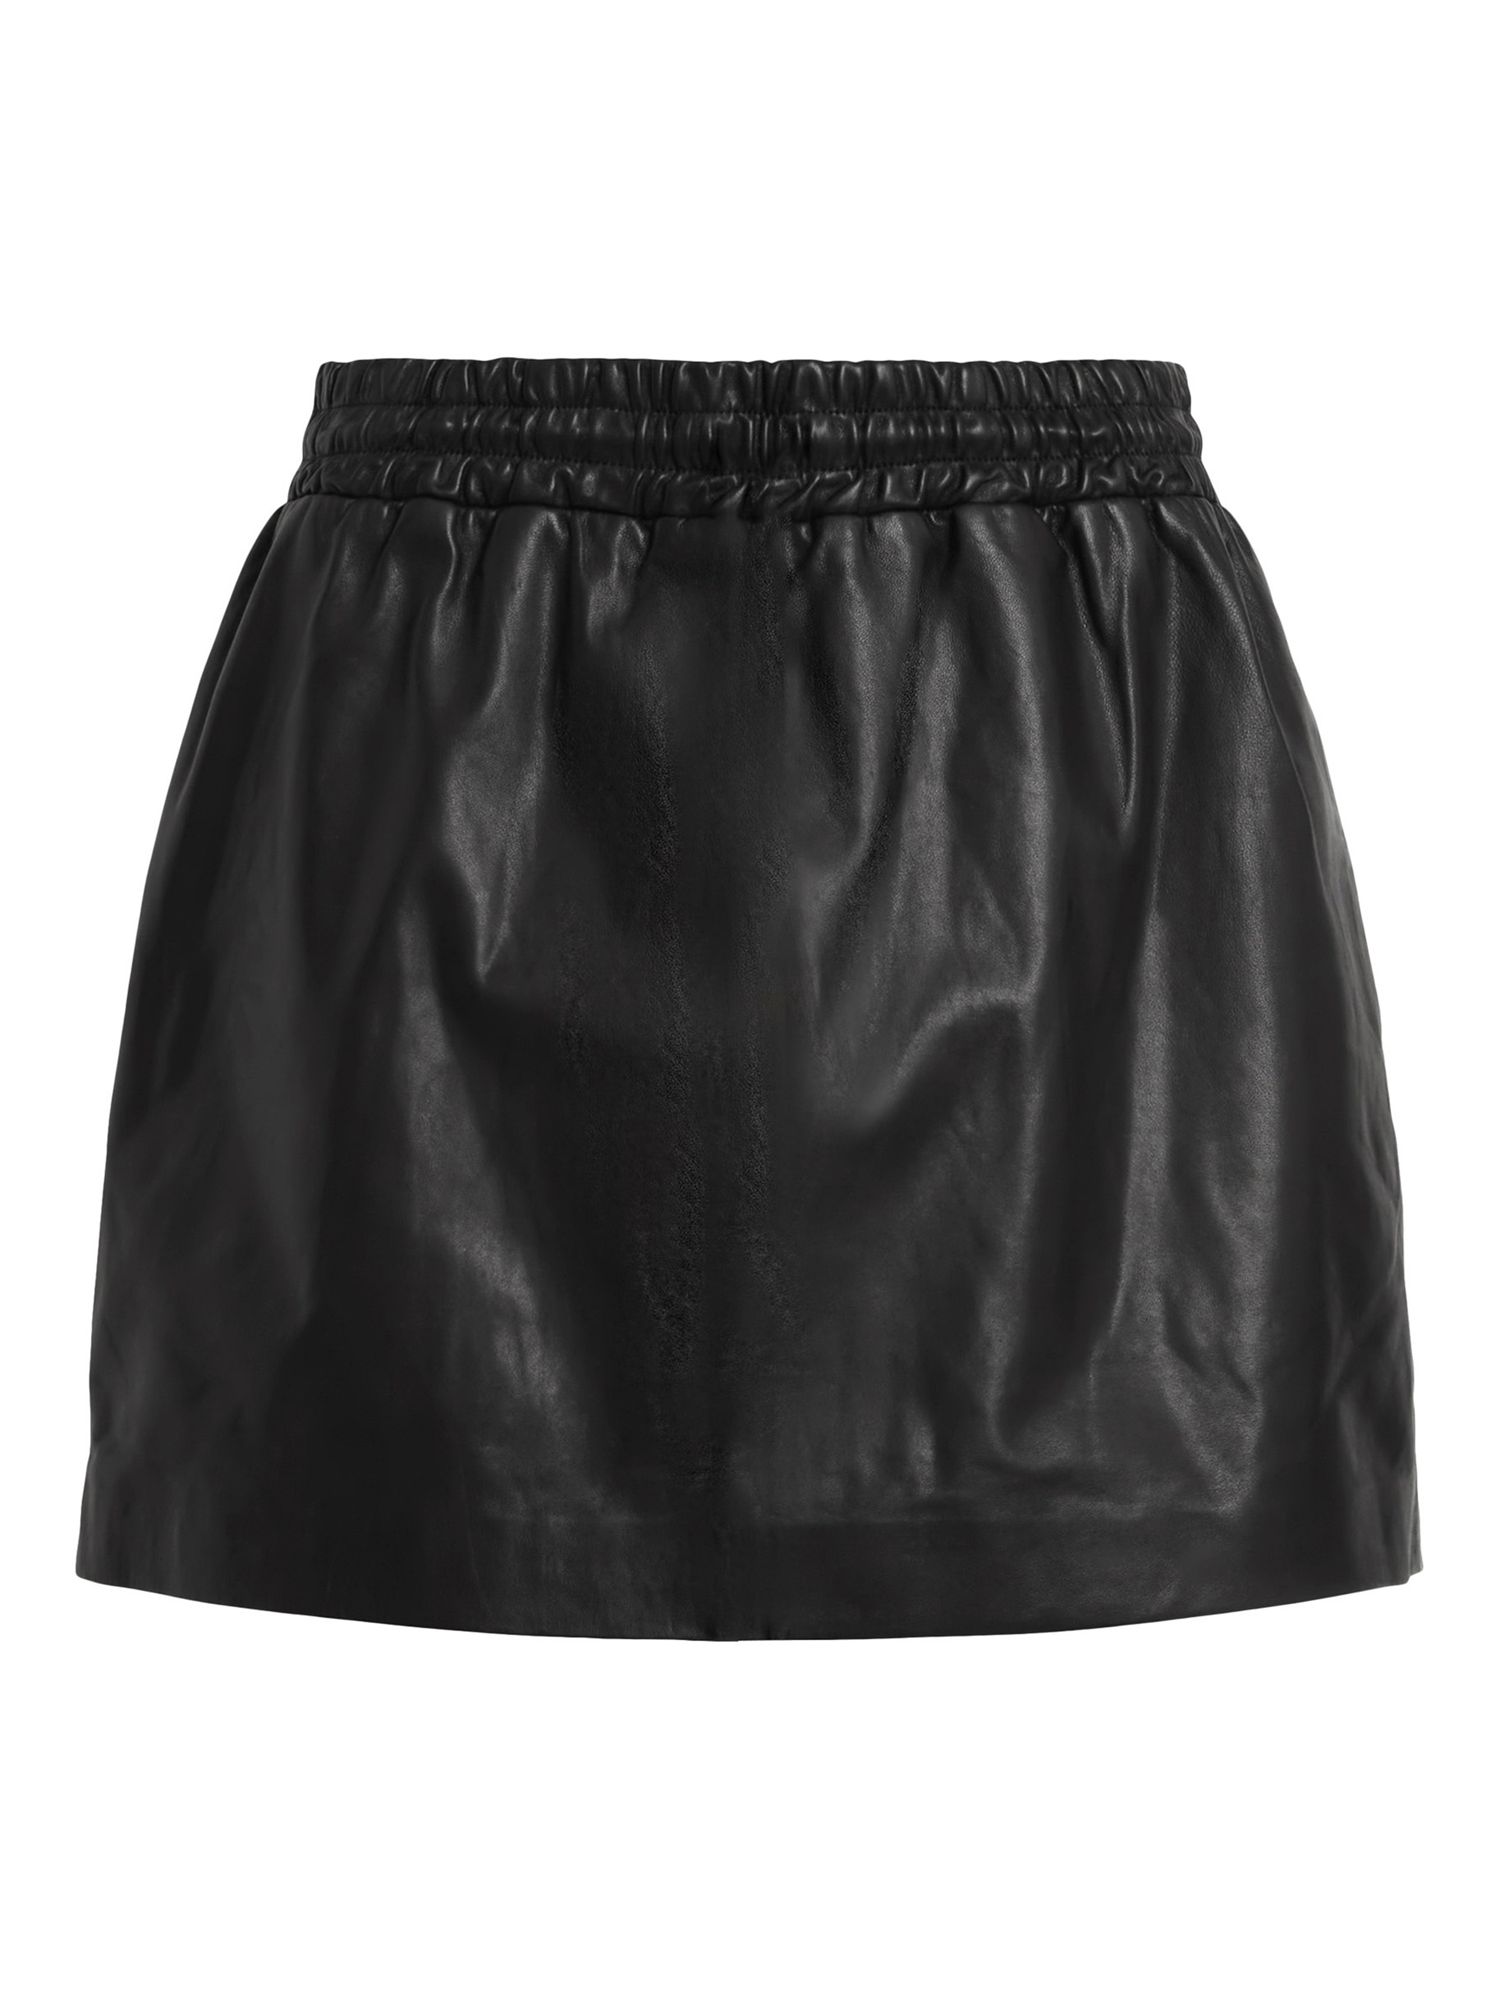 AllSaints Shana Leather Mini Skirt, Black at John Lewis & Partners